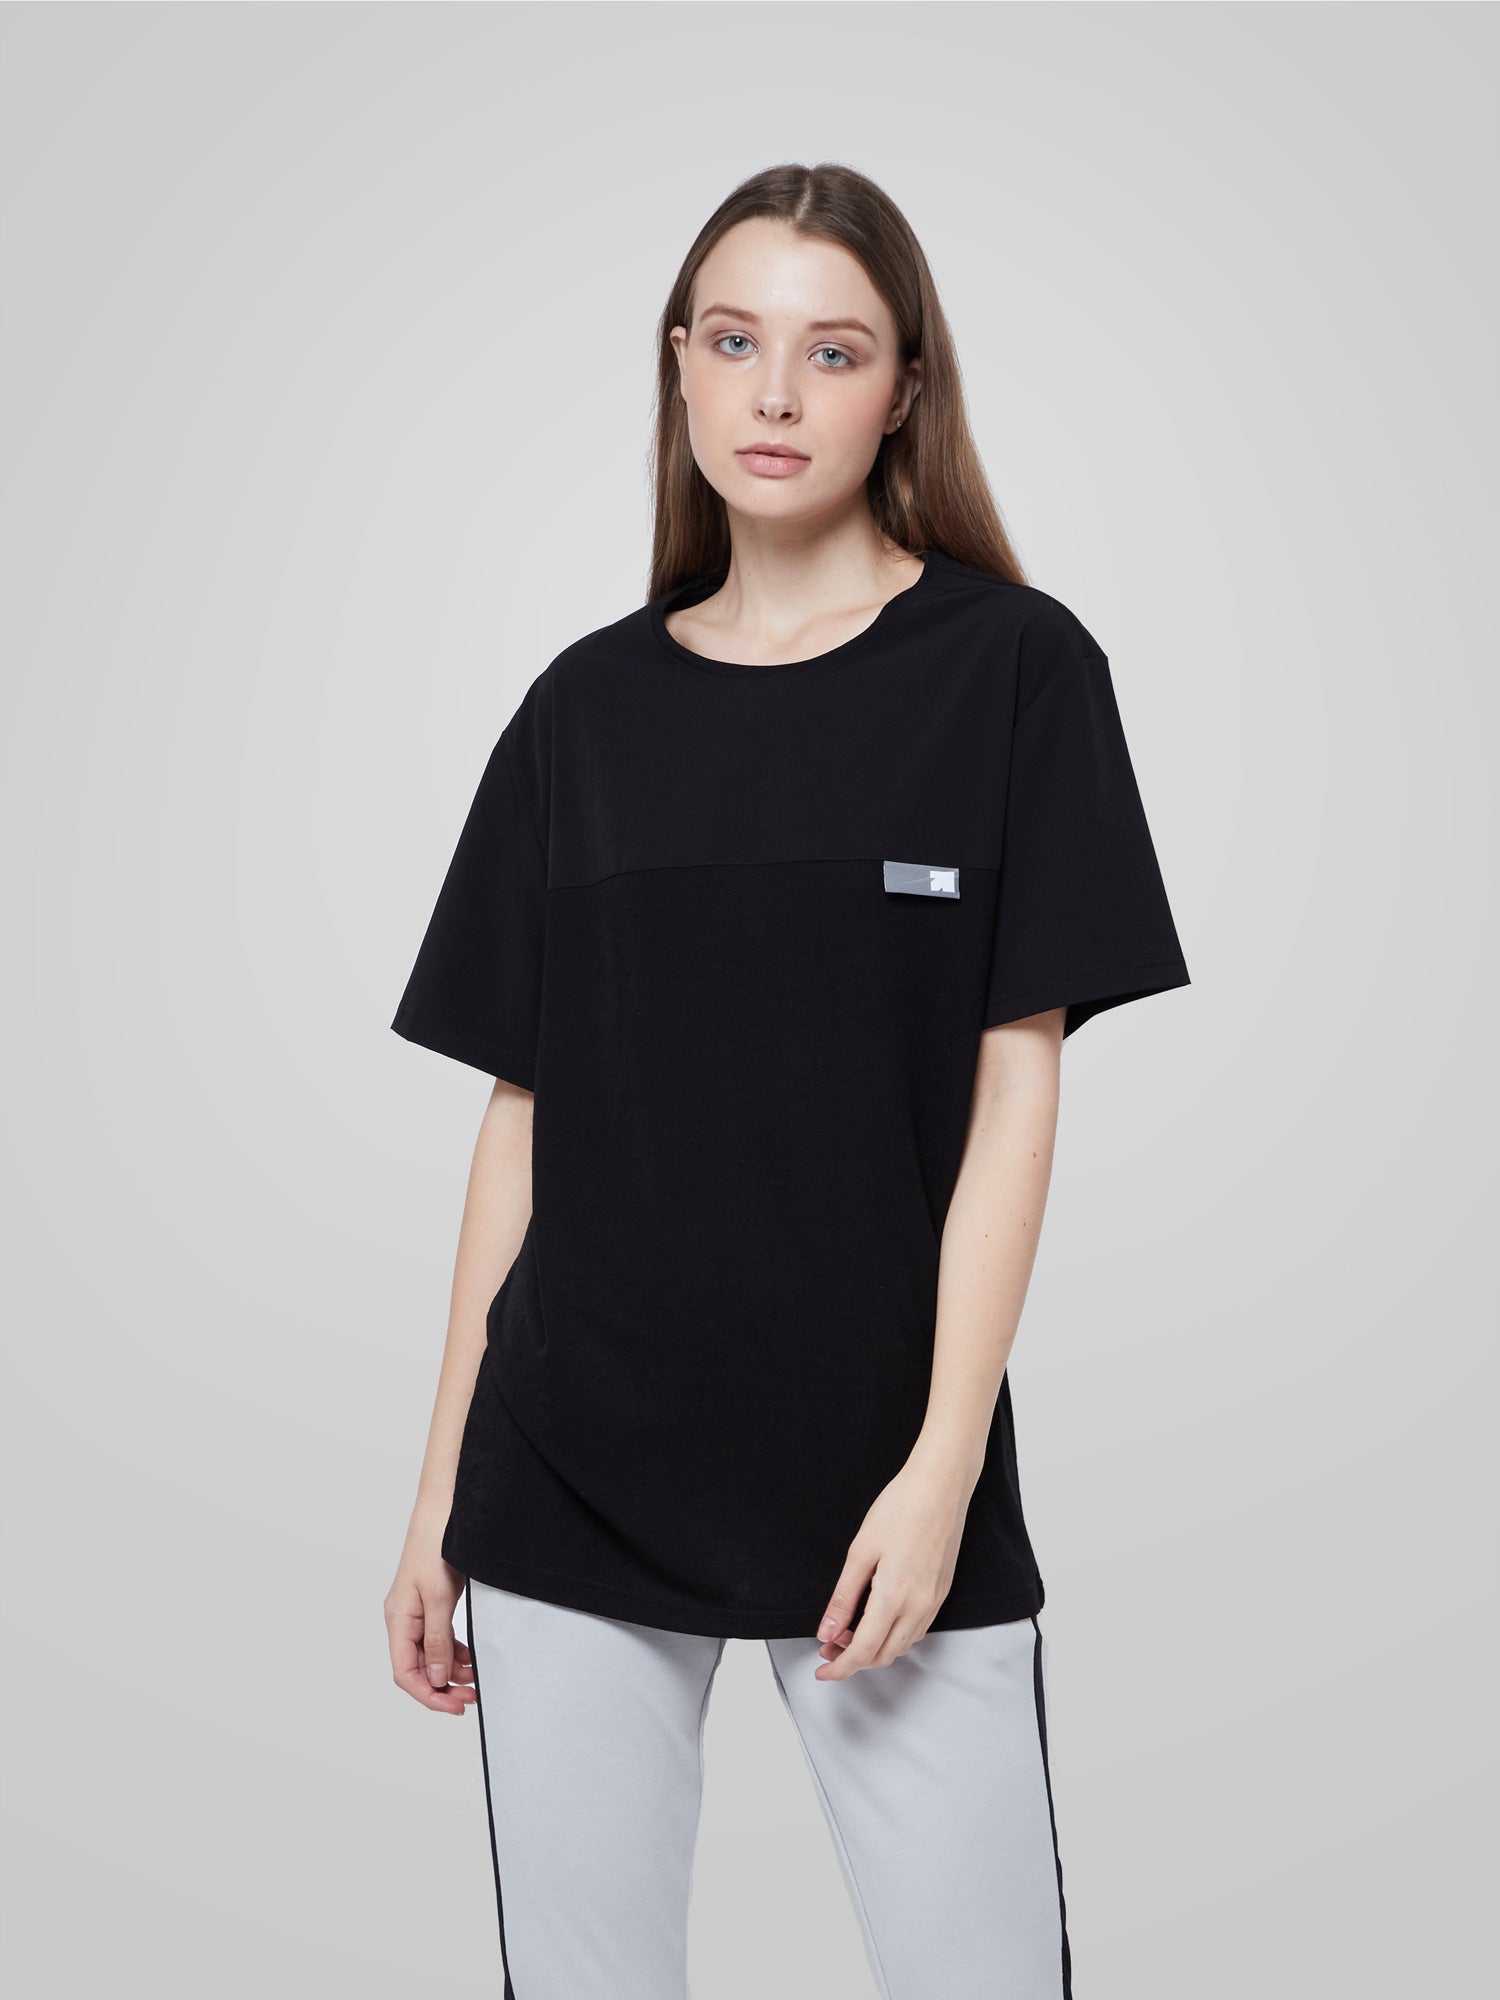 Unisex Ultimate Utilitarian Black Female T-shirt